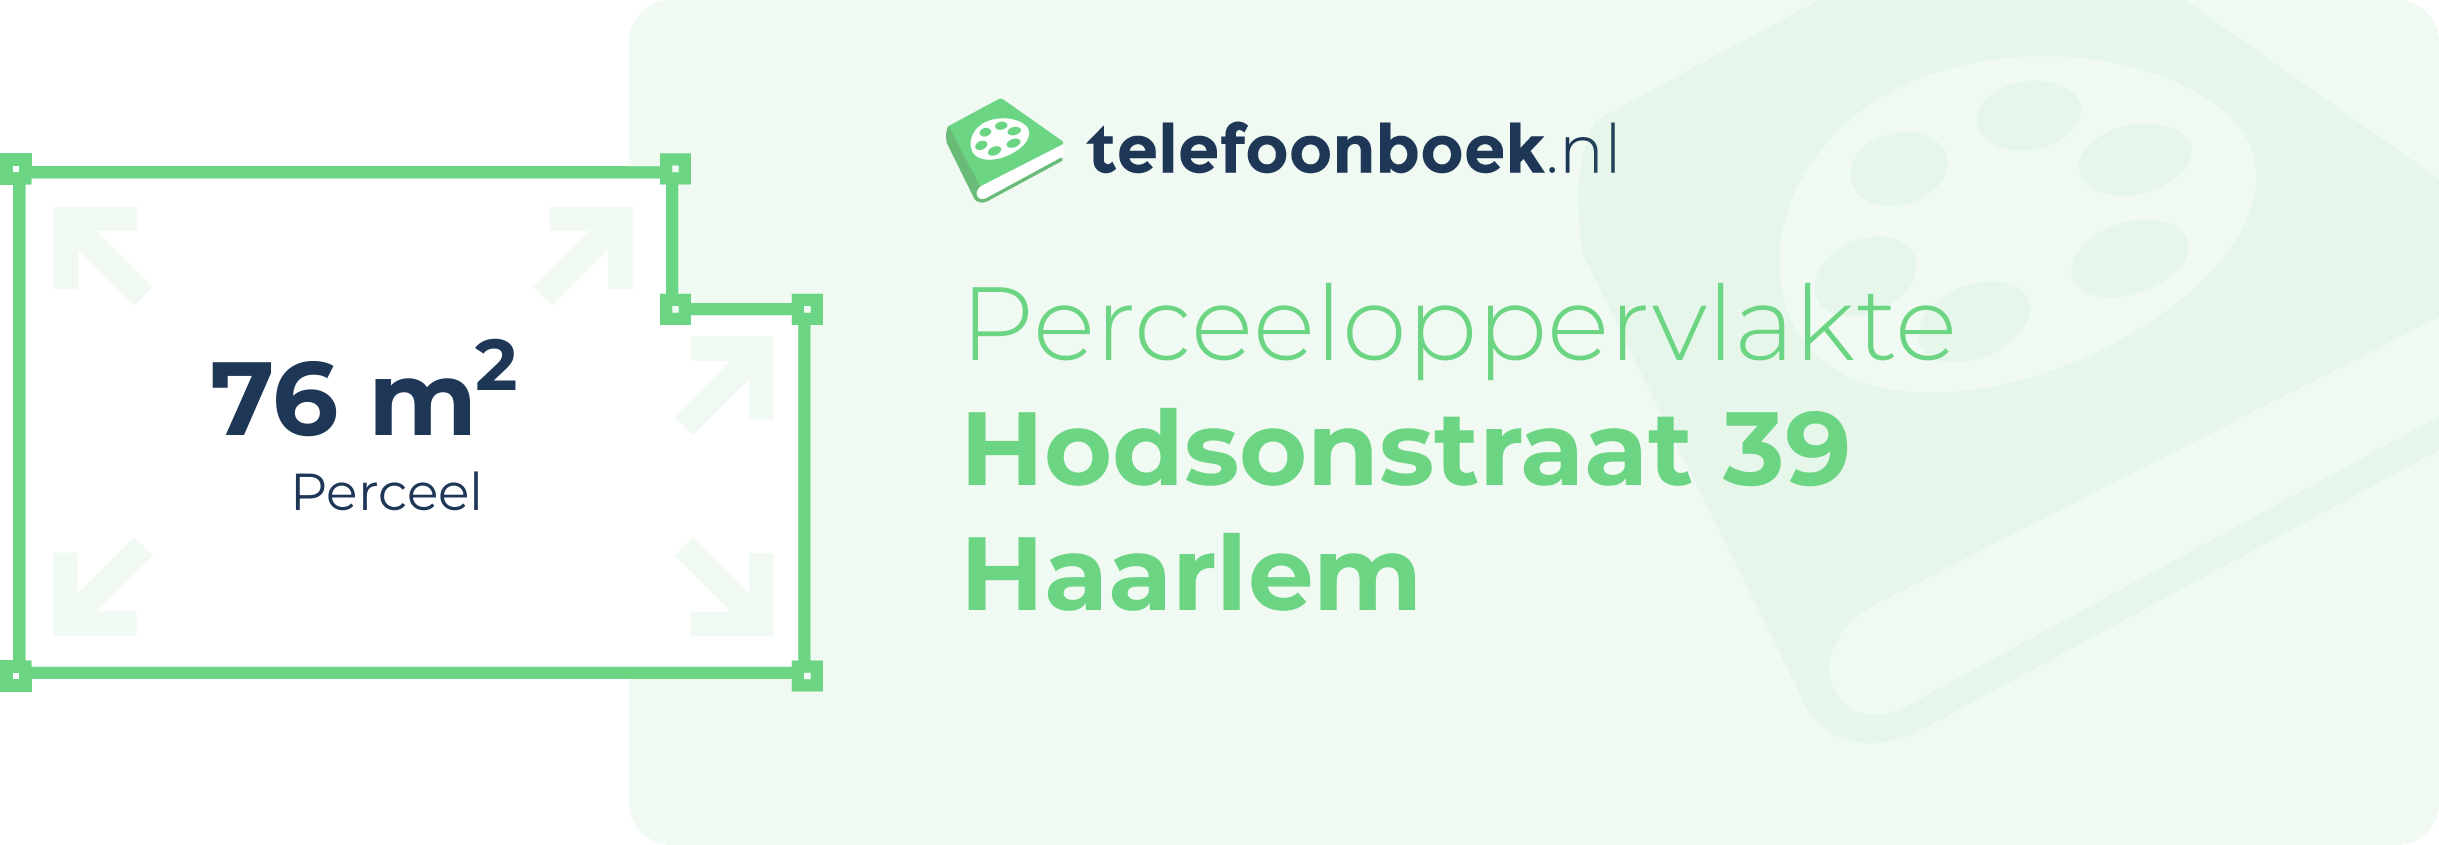 Perceeloppervlakte Hodsonstraat 39 Haarlem